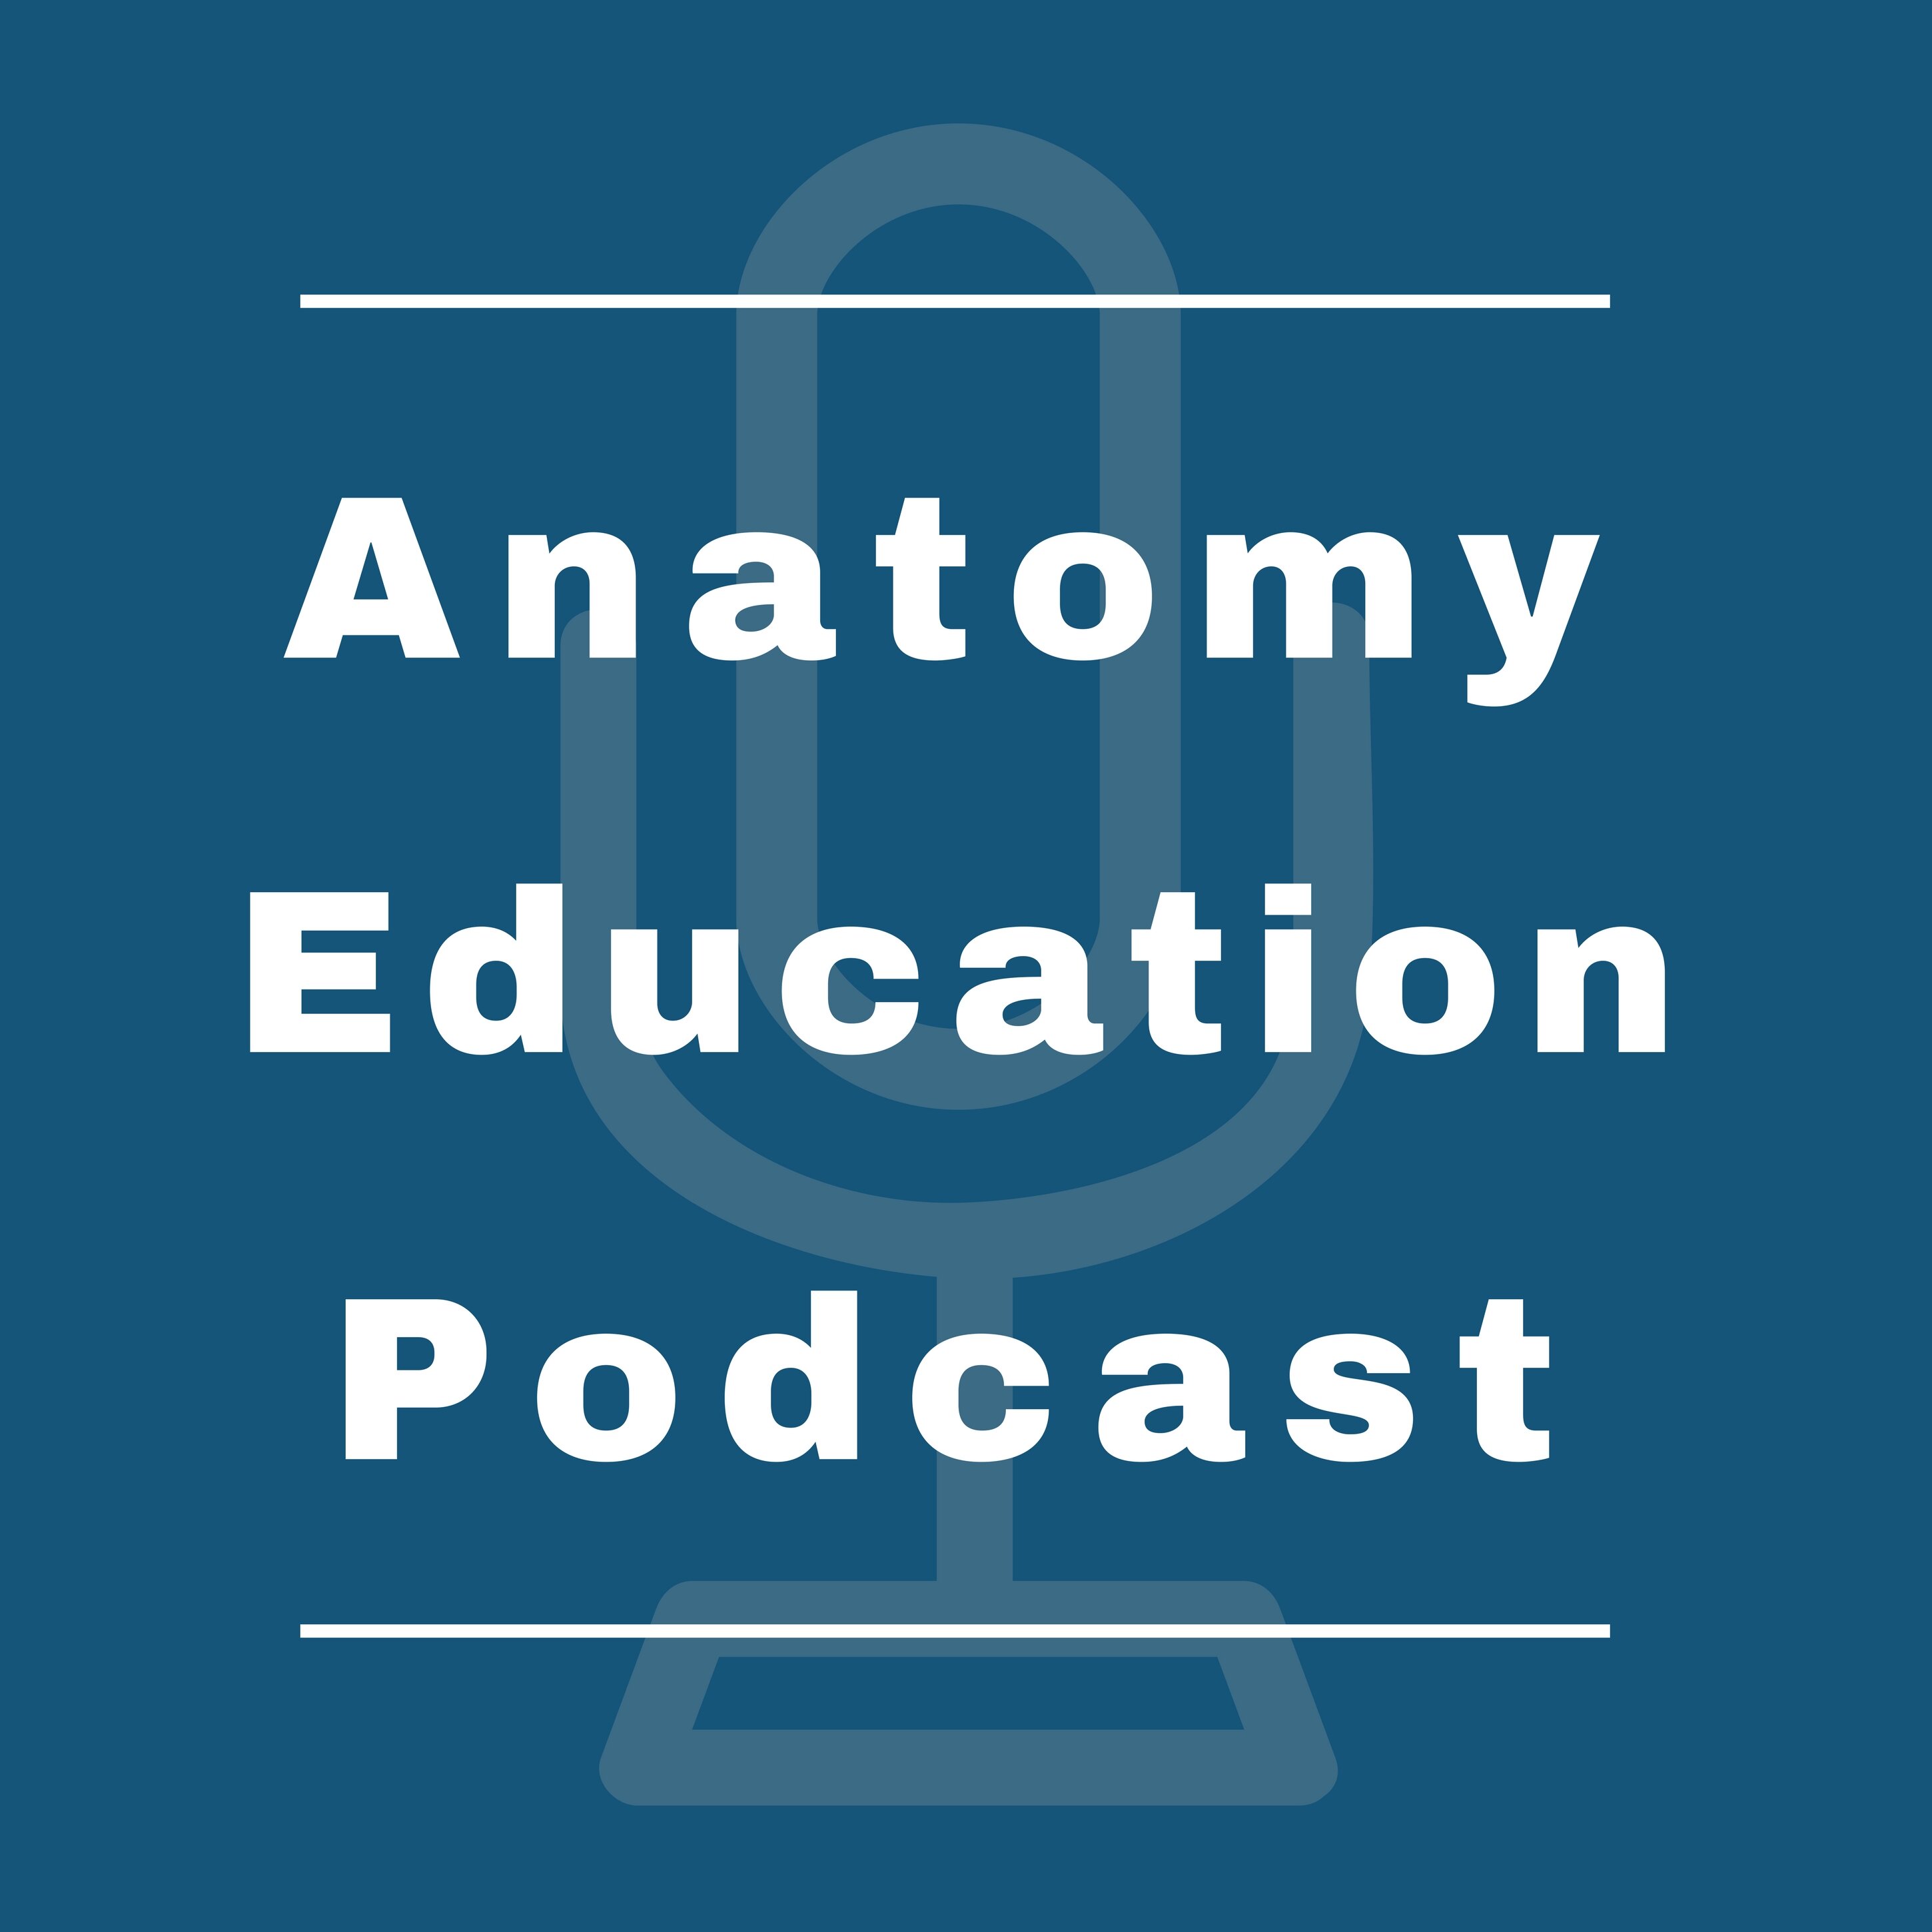 Anatomy Education Podcast logo